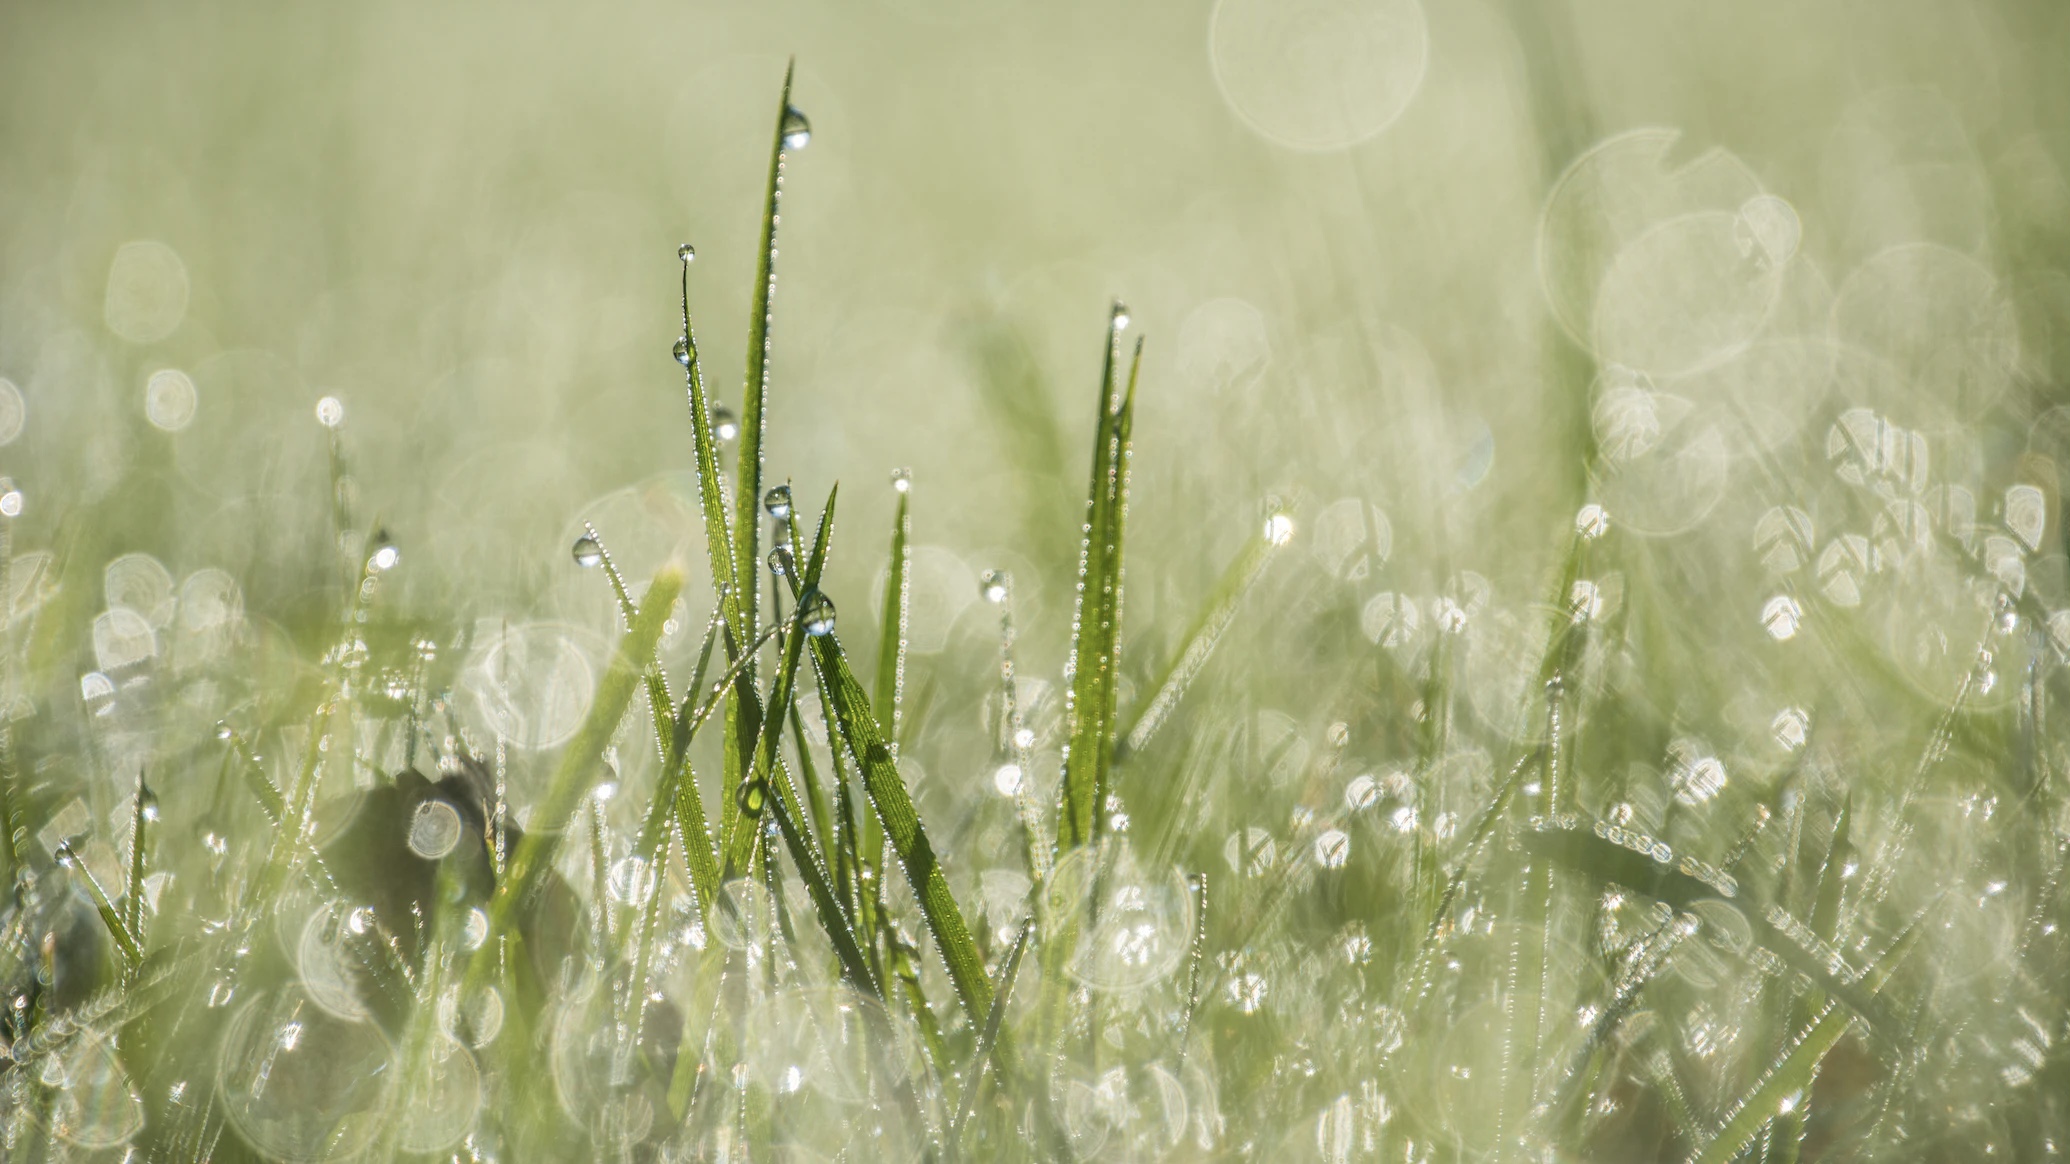 Rumput yang terkena hujan. (Sumber gambar : Unsplash/Thomas Couillard)